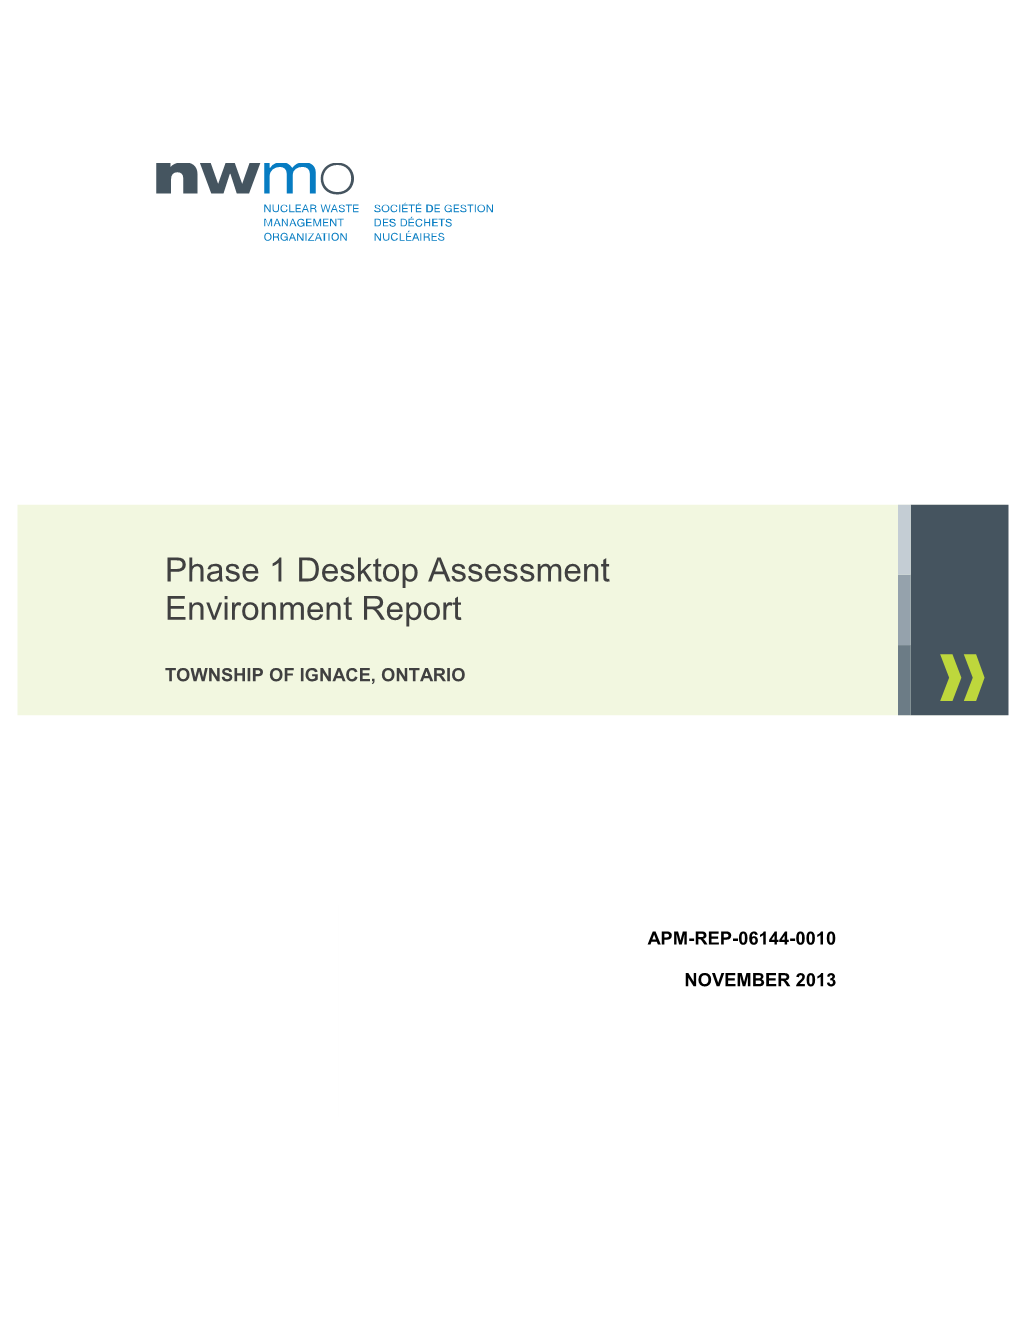 Phase 1 Desktop Assessment Environment Report Township Of